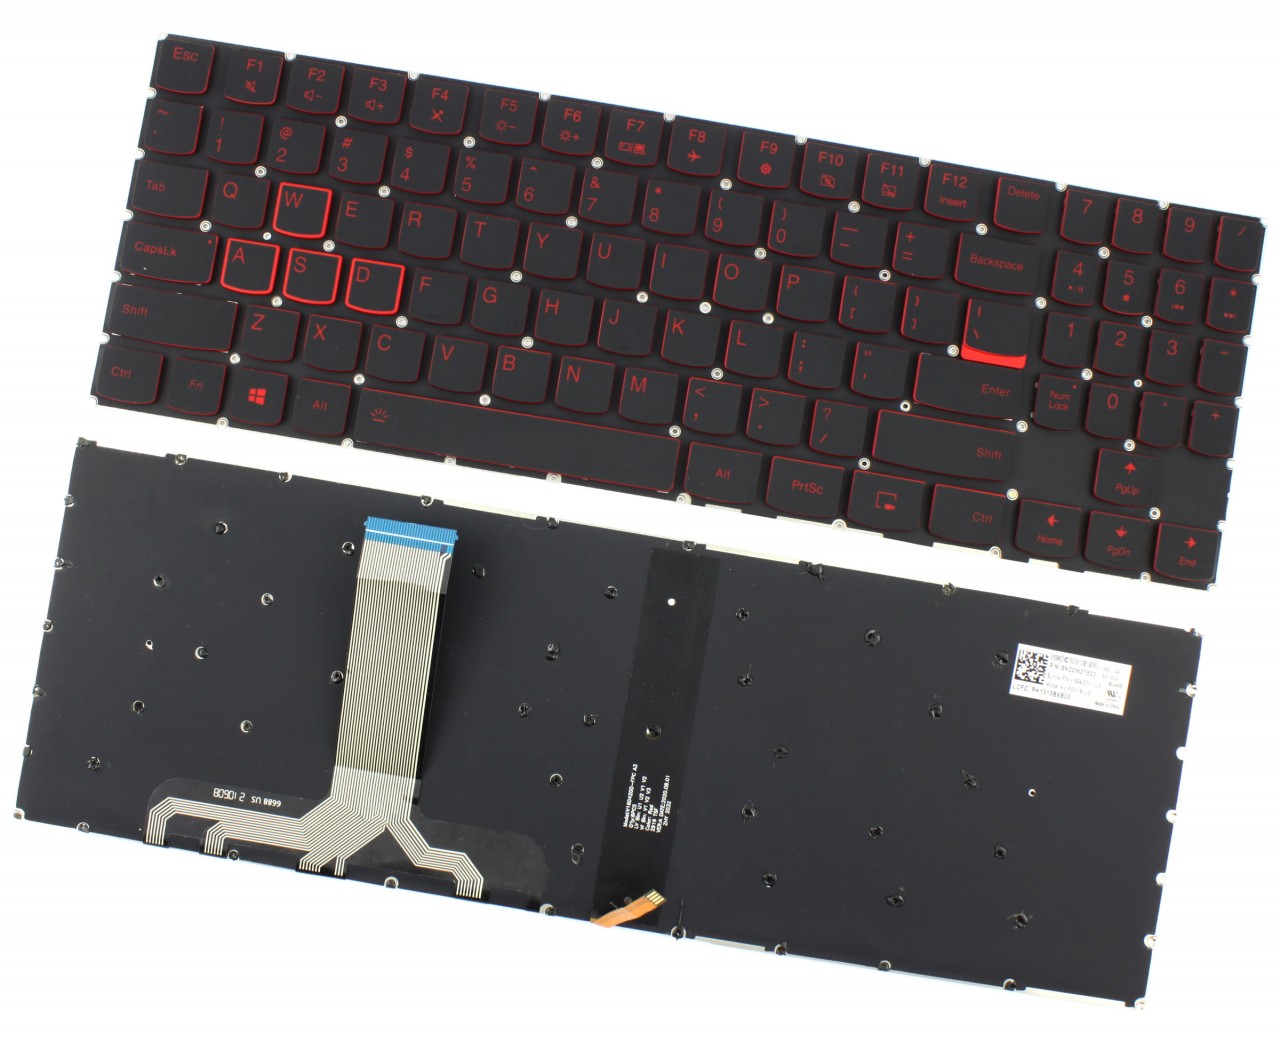 Tastatura Lenovo V150420FK1 red color llumination backlit keys image7